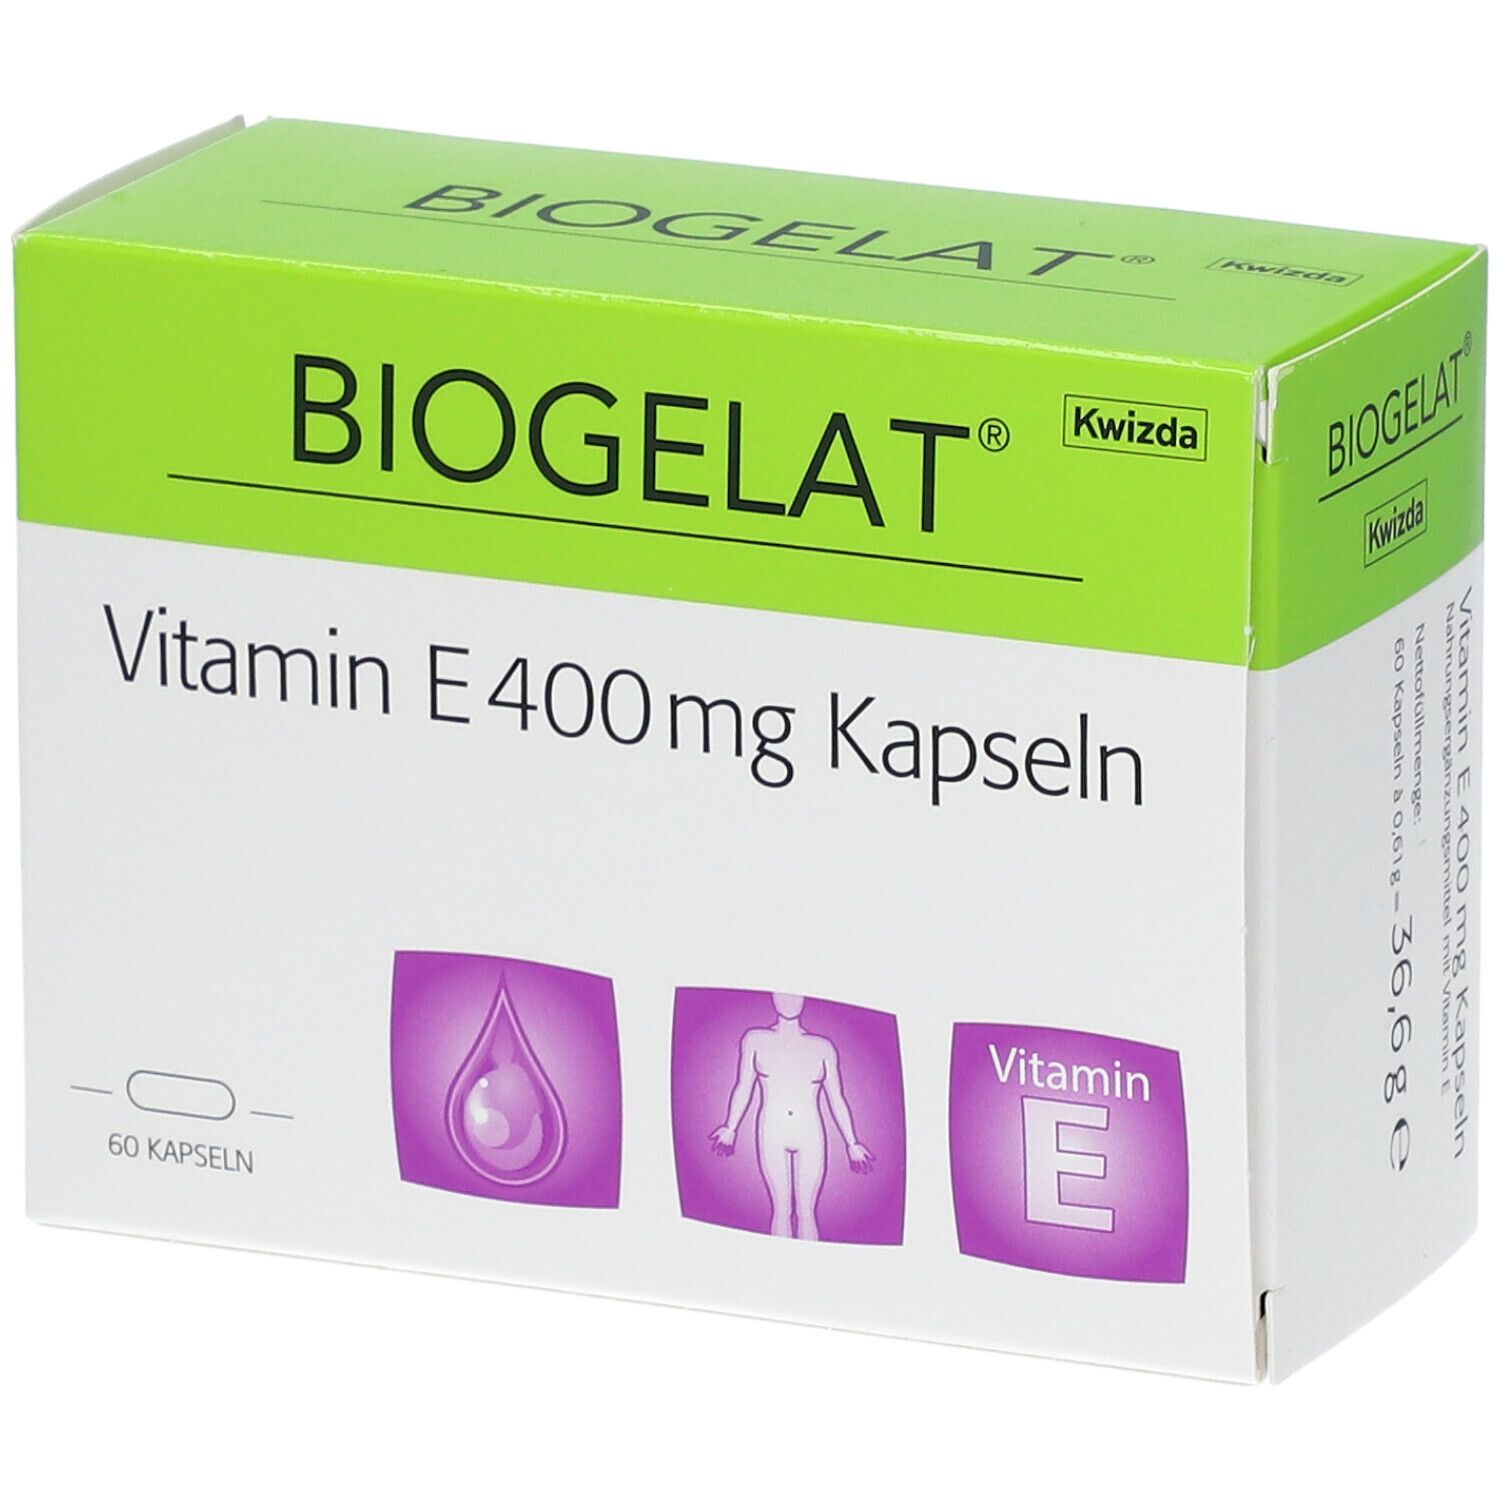 BIOGELAT® Vitamin E 400 mg Kapseln